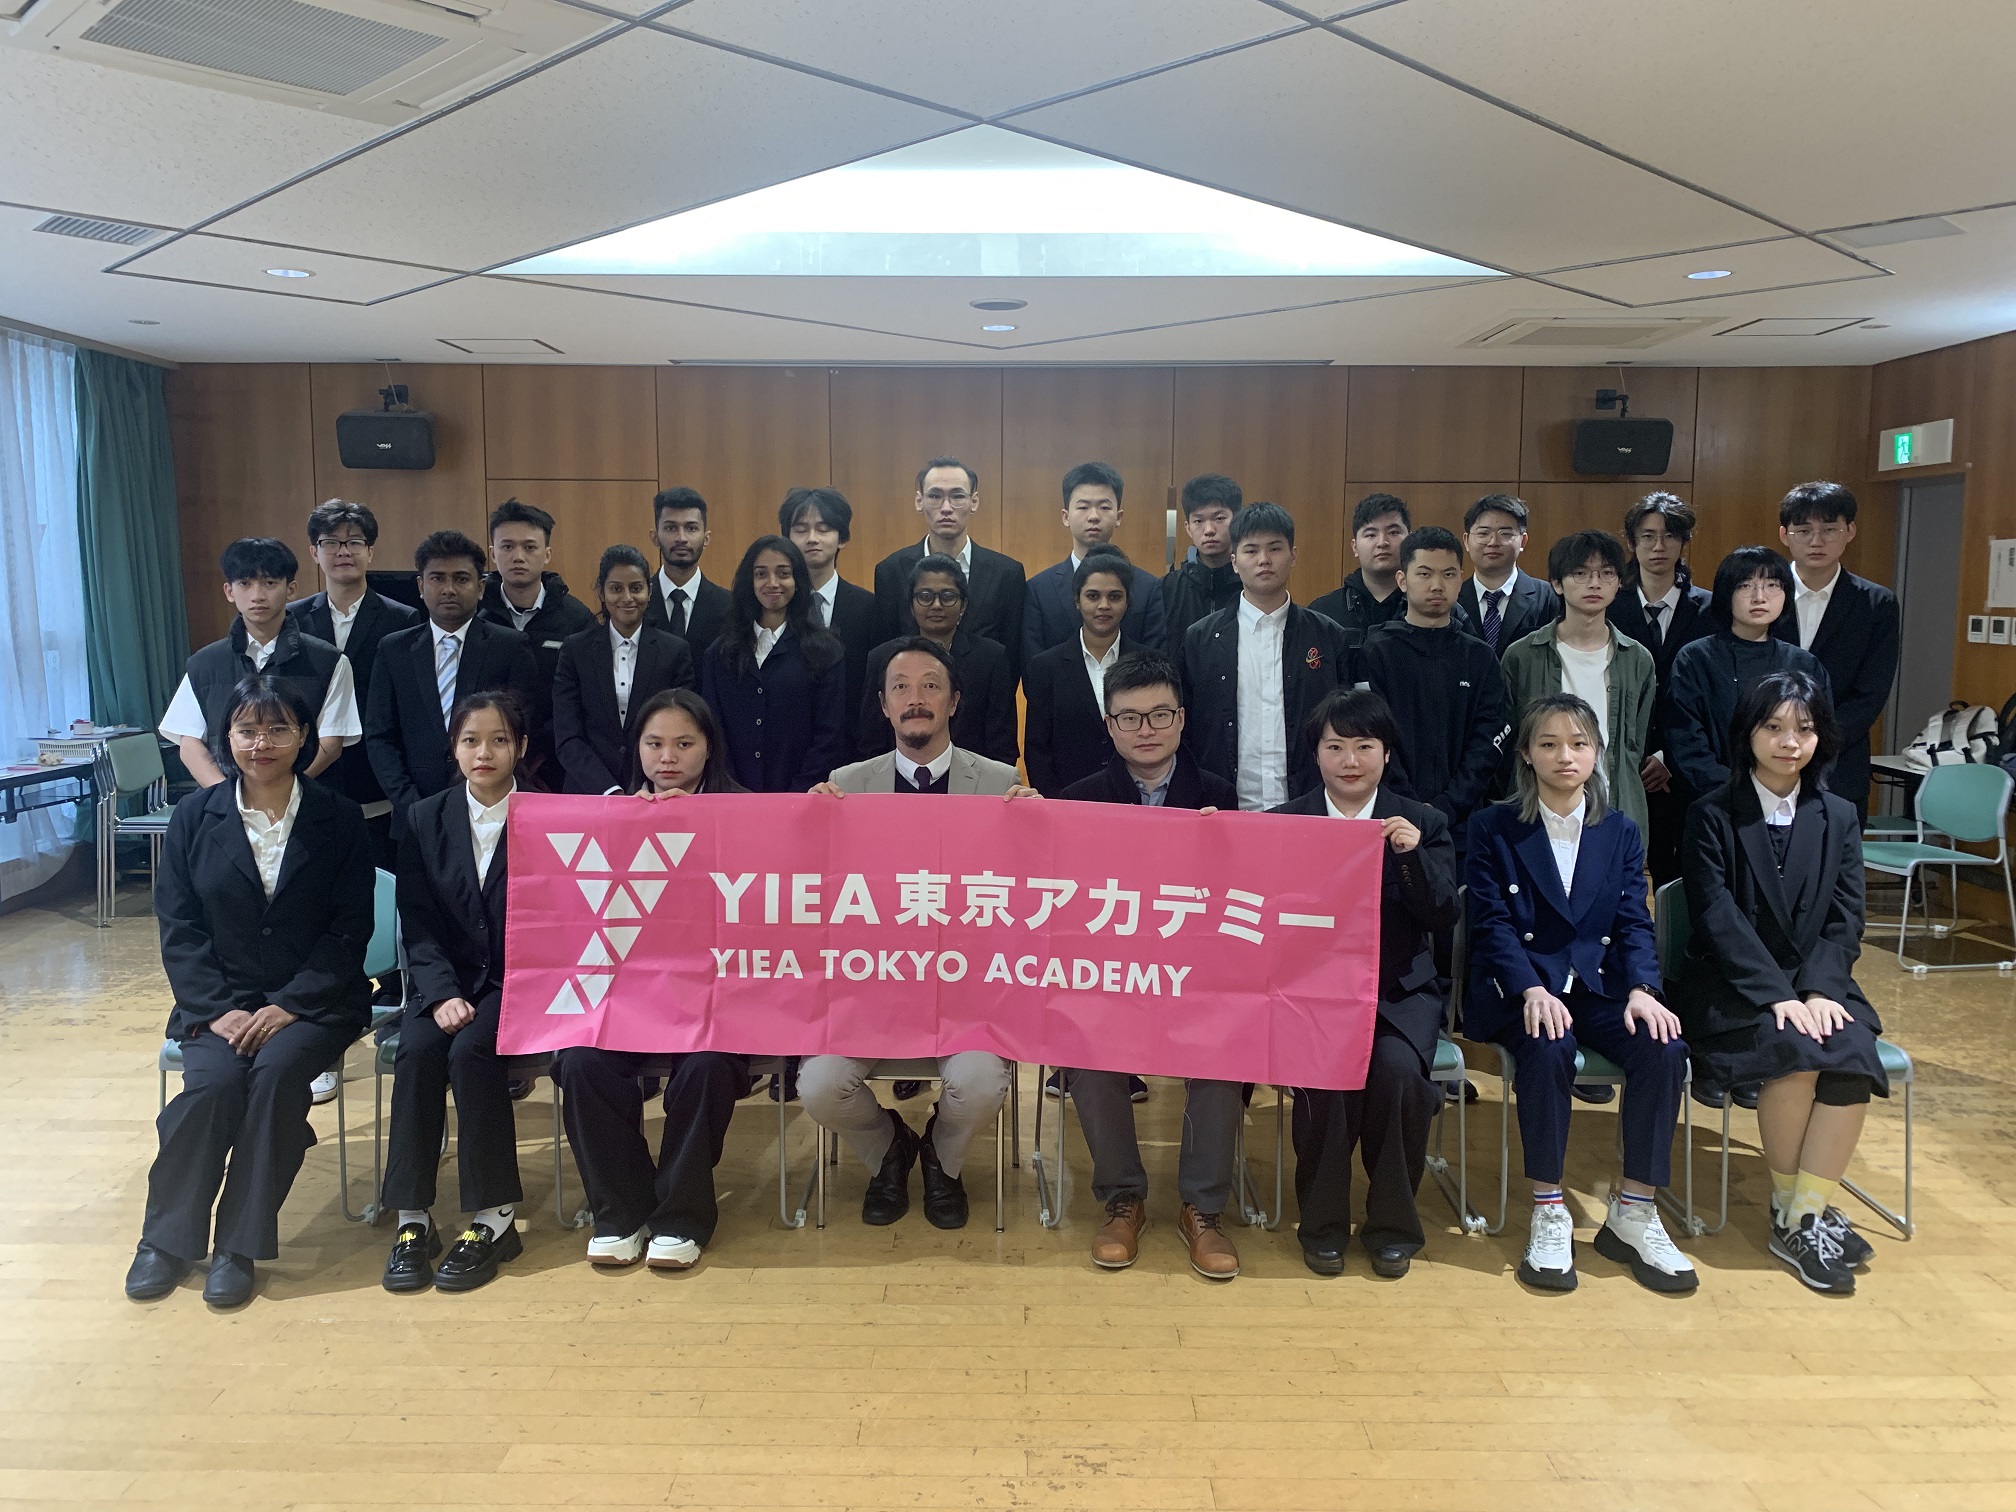 Welcome to YIEA Tokyo Academy!